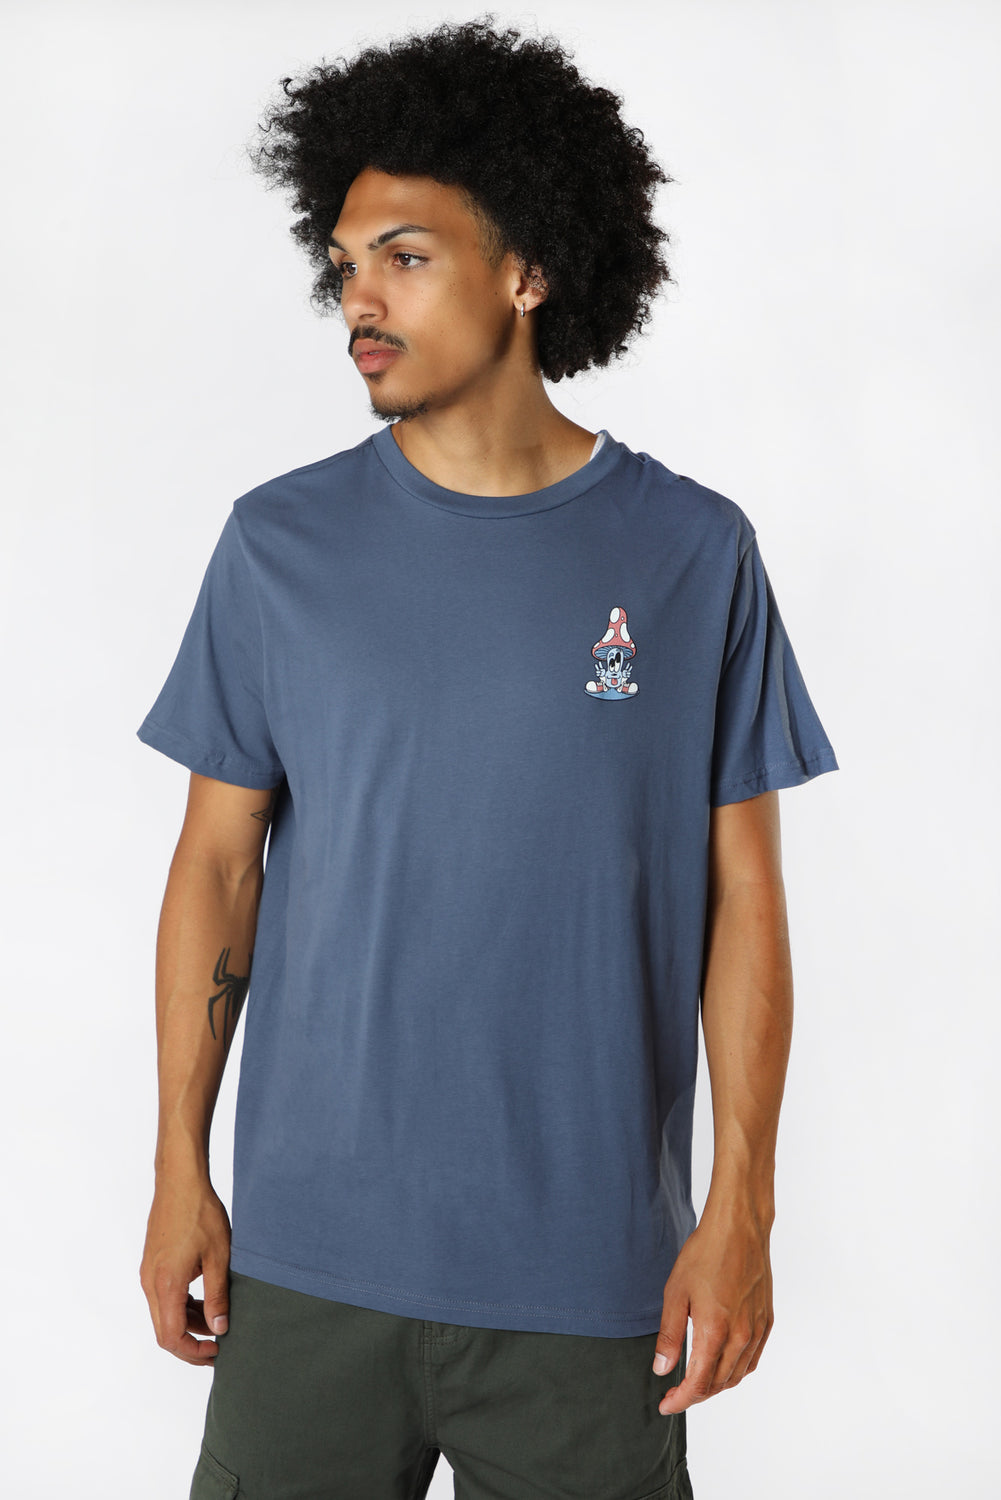 Death Valley Mens One Way Trip T-Shirt Light Denim Blue